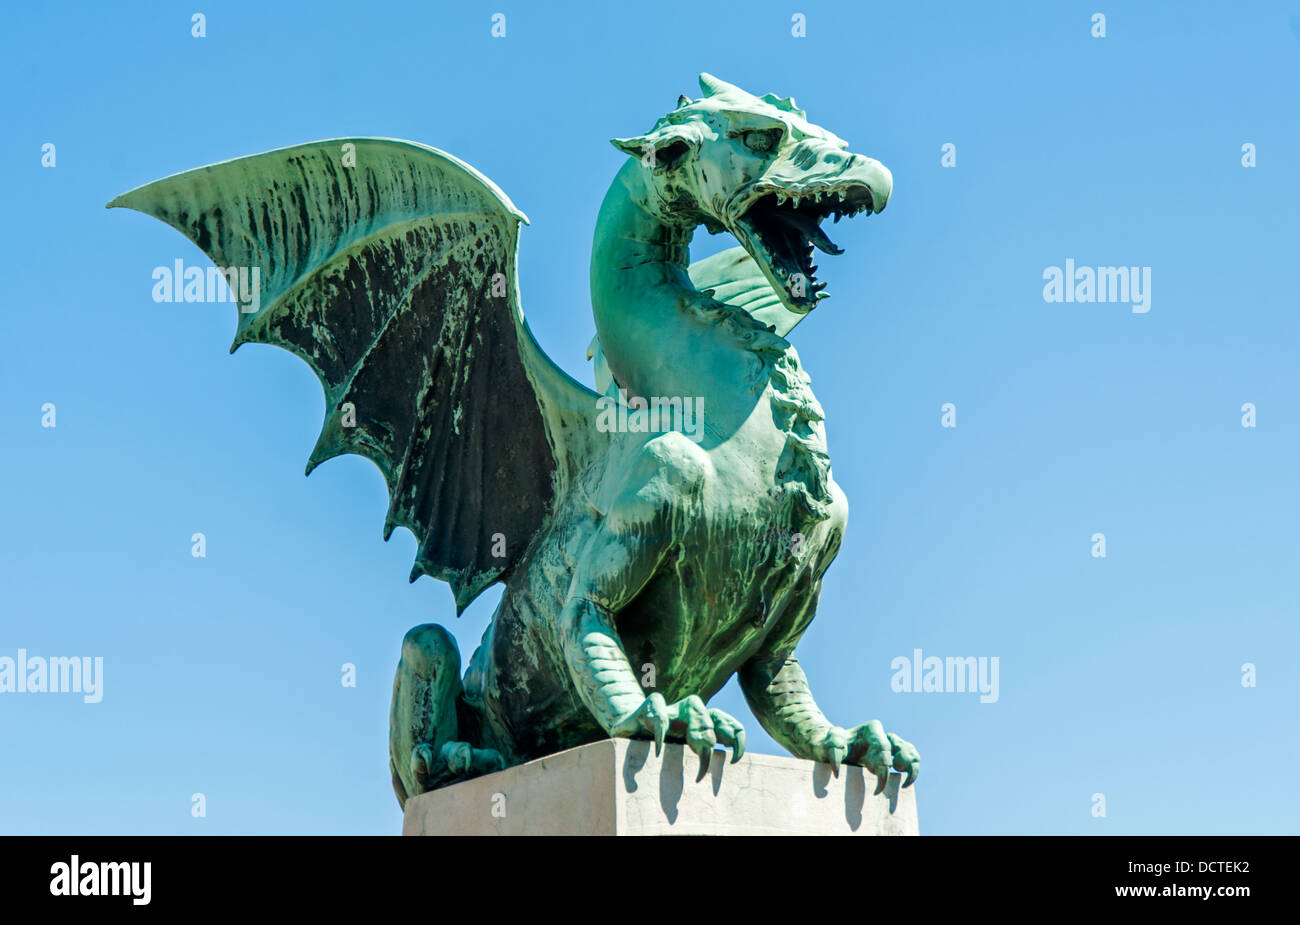 Drachenstatue, Symbol von Ljubljana, Hauptstadt Sloweniens Stockfoto